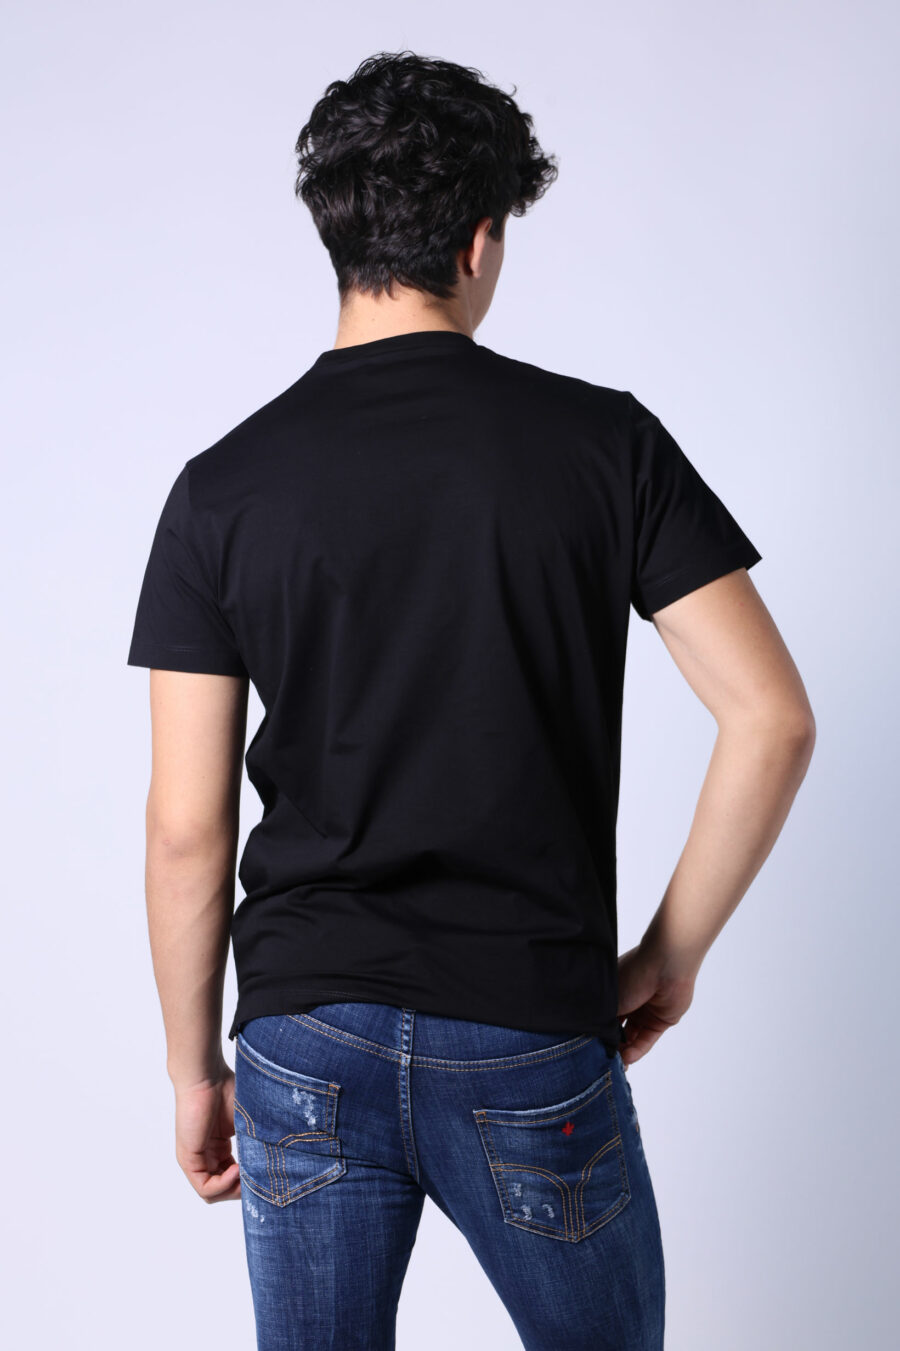 Camiseta negra con maxilogo "college" azul - Untitled Catalog 05351